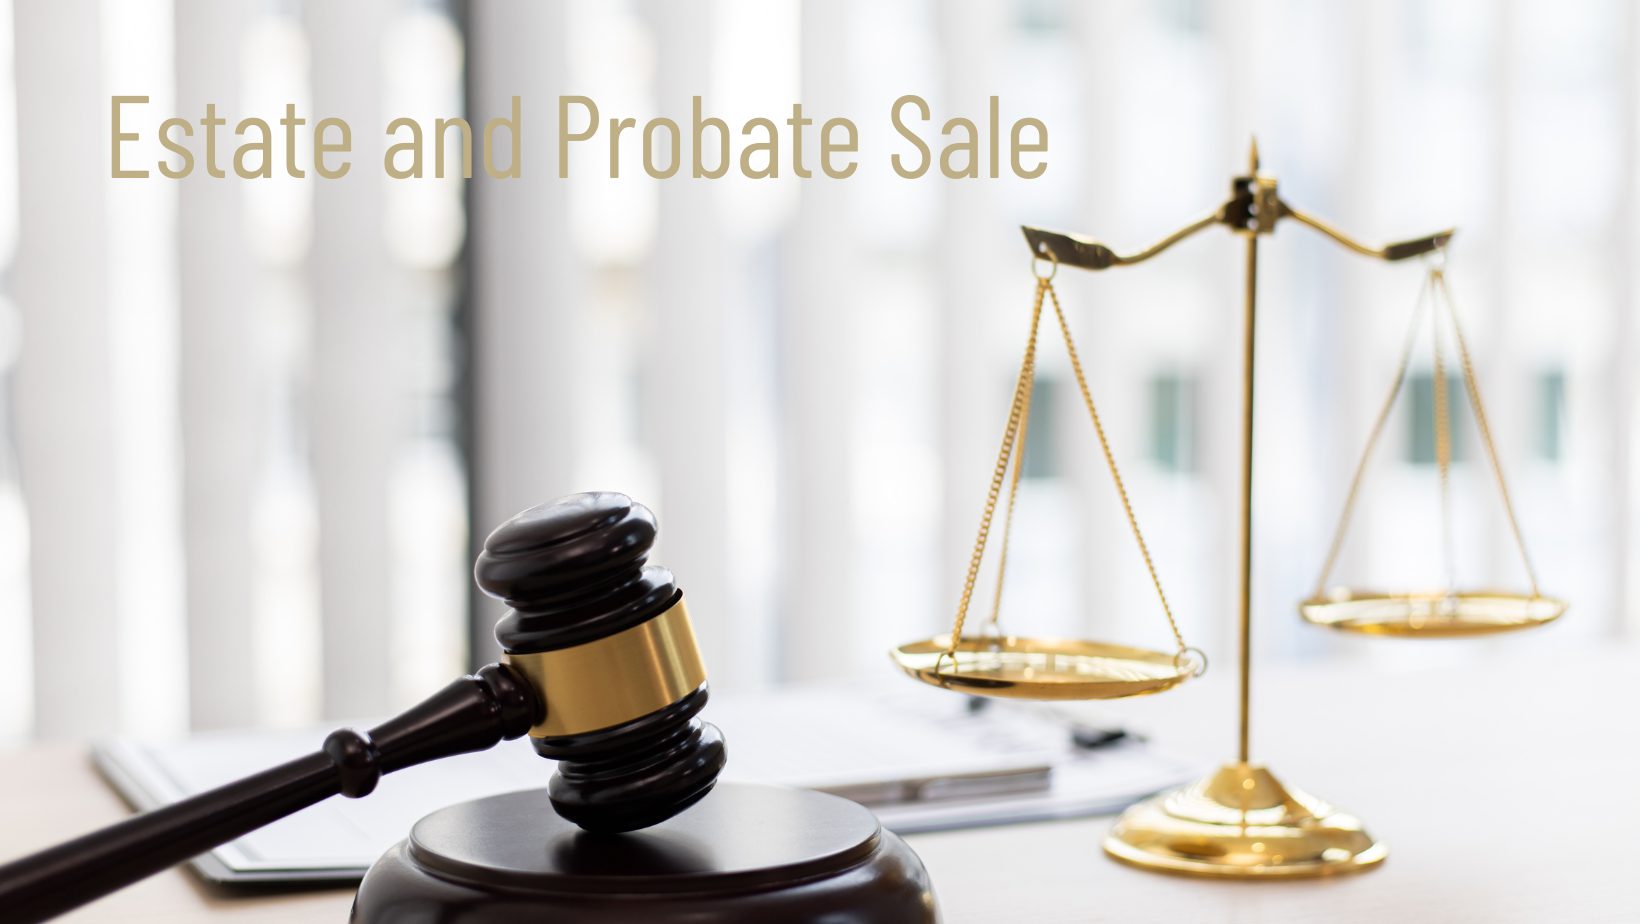 Estate and Probate Sale